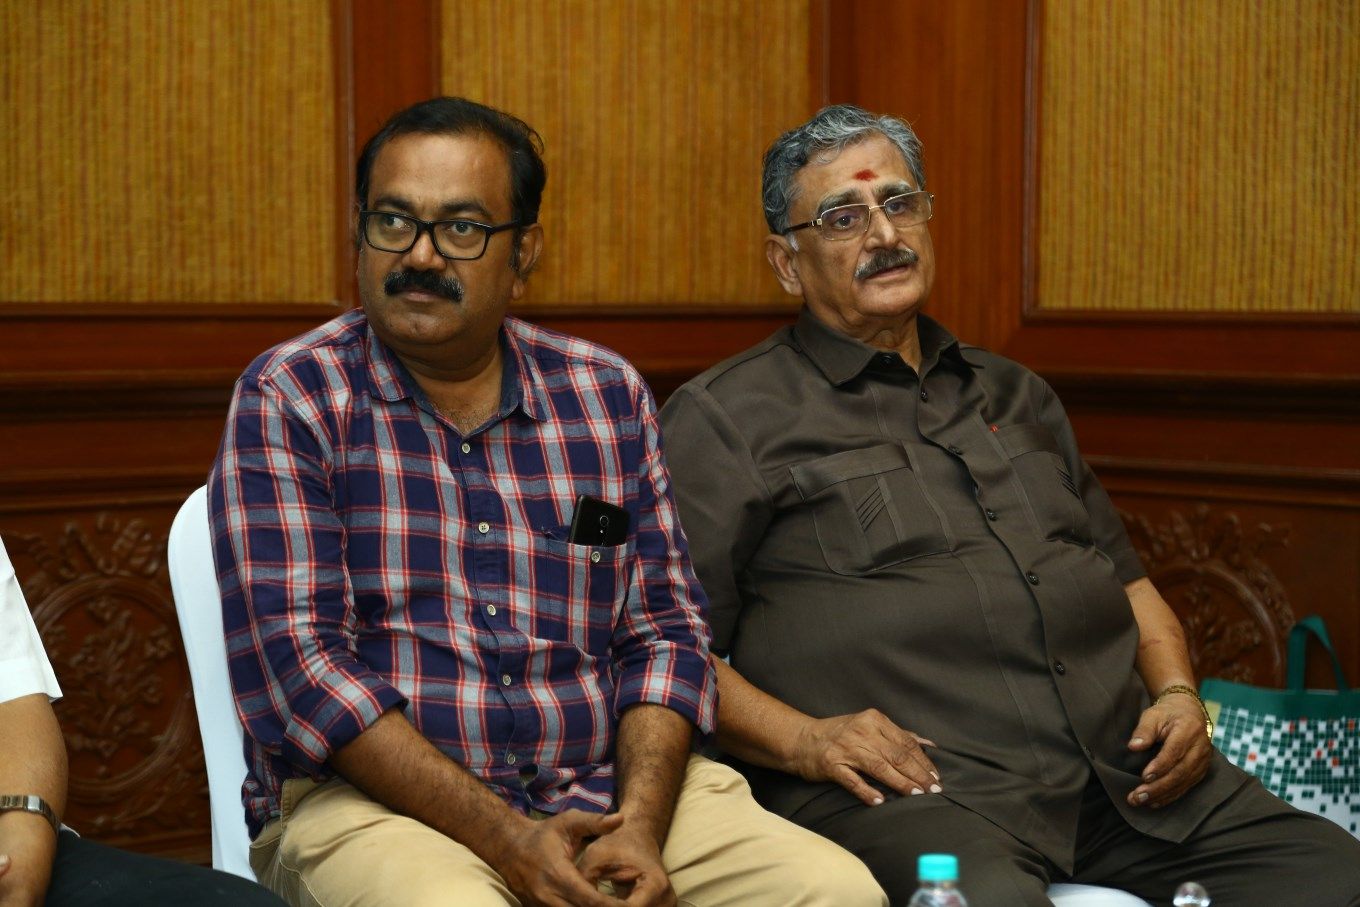 Brahma Vidhdhai EBook Launch Event Photos Tamil Gallery